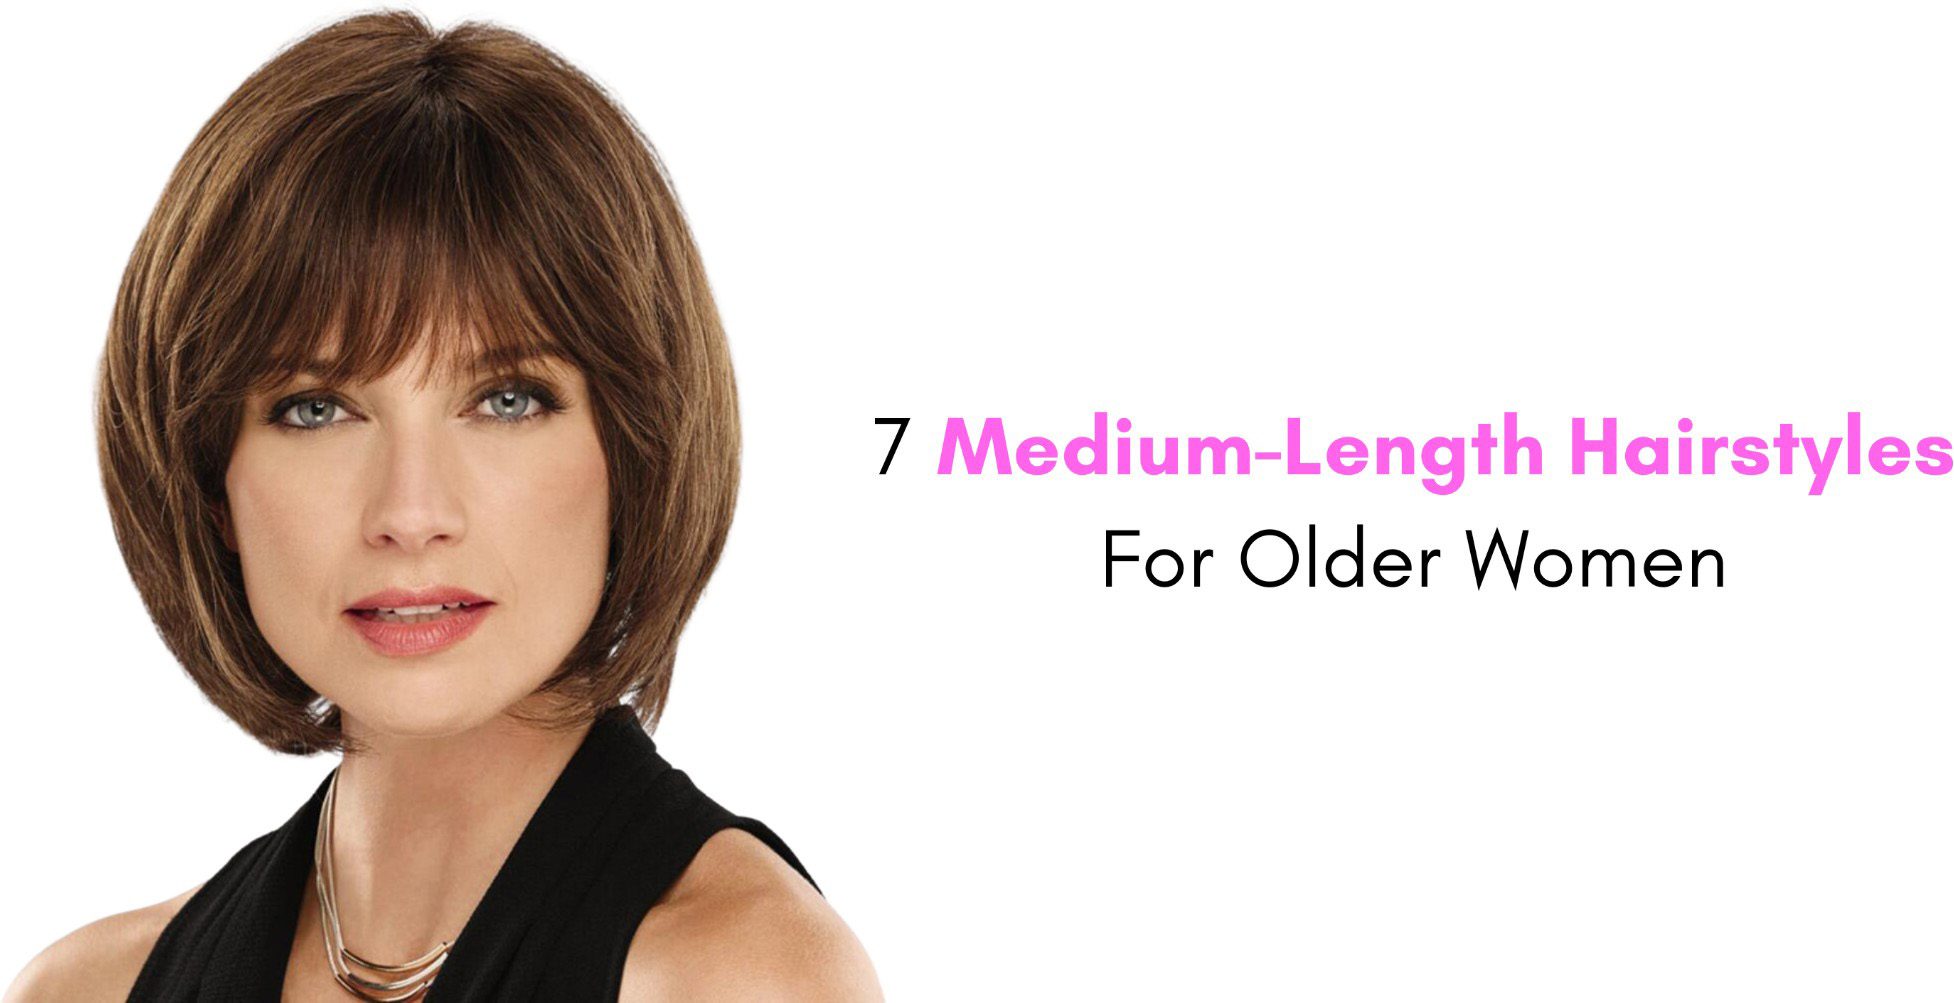 7 medium-length hairstyles for older women